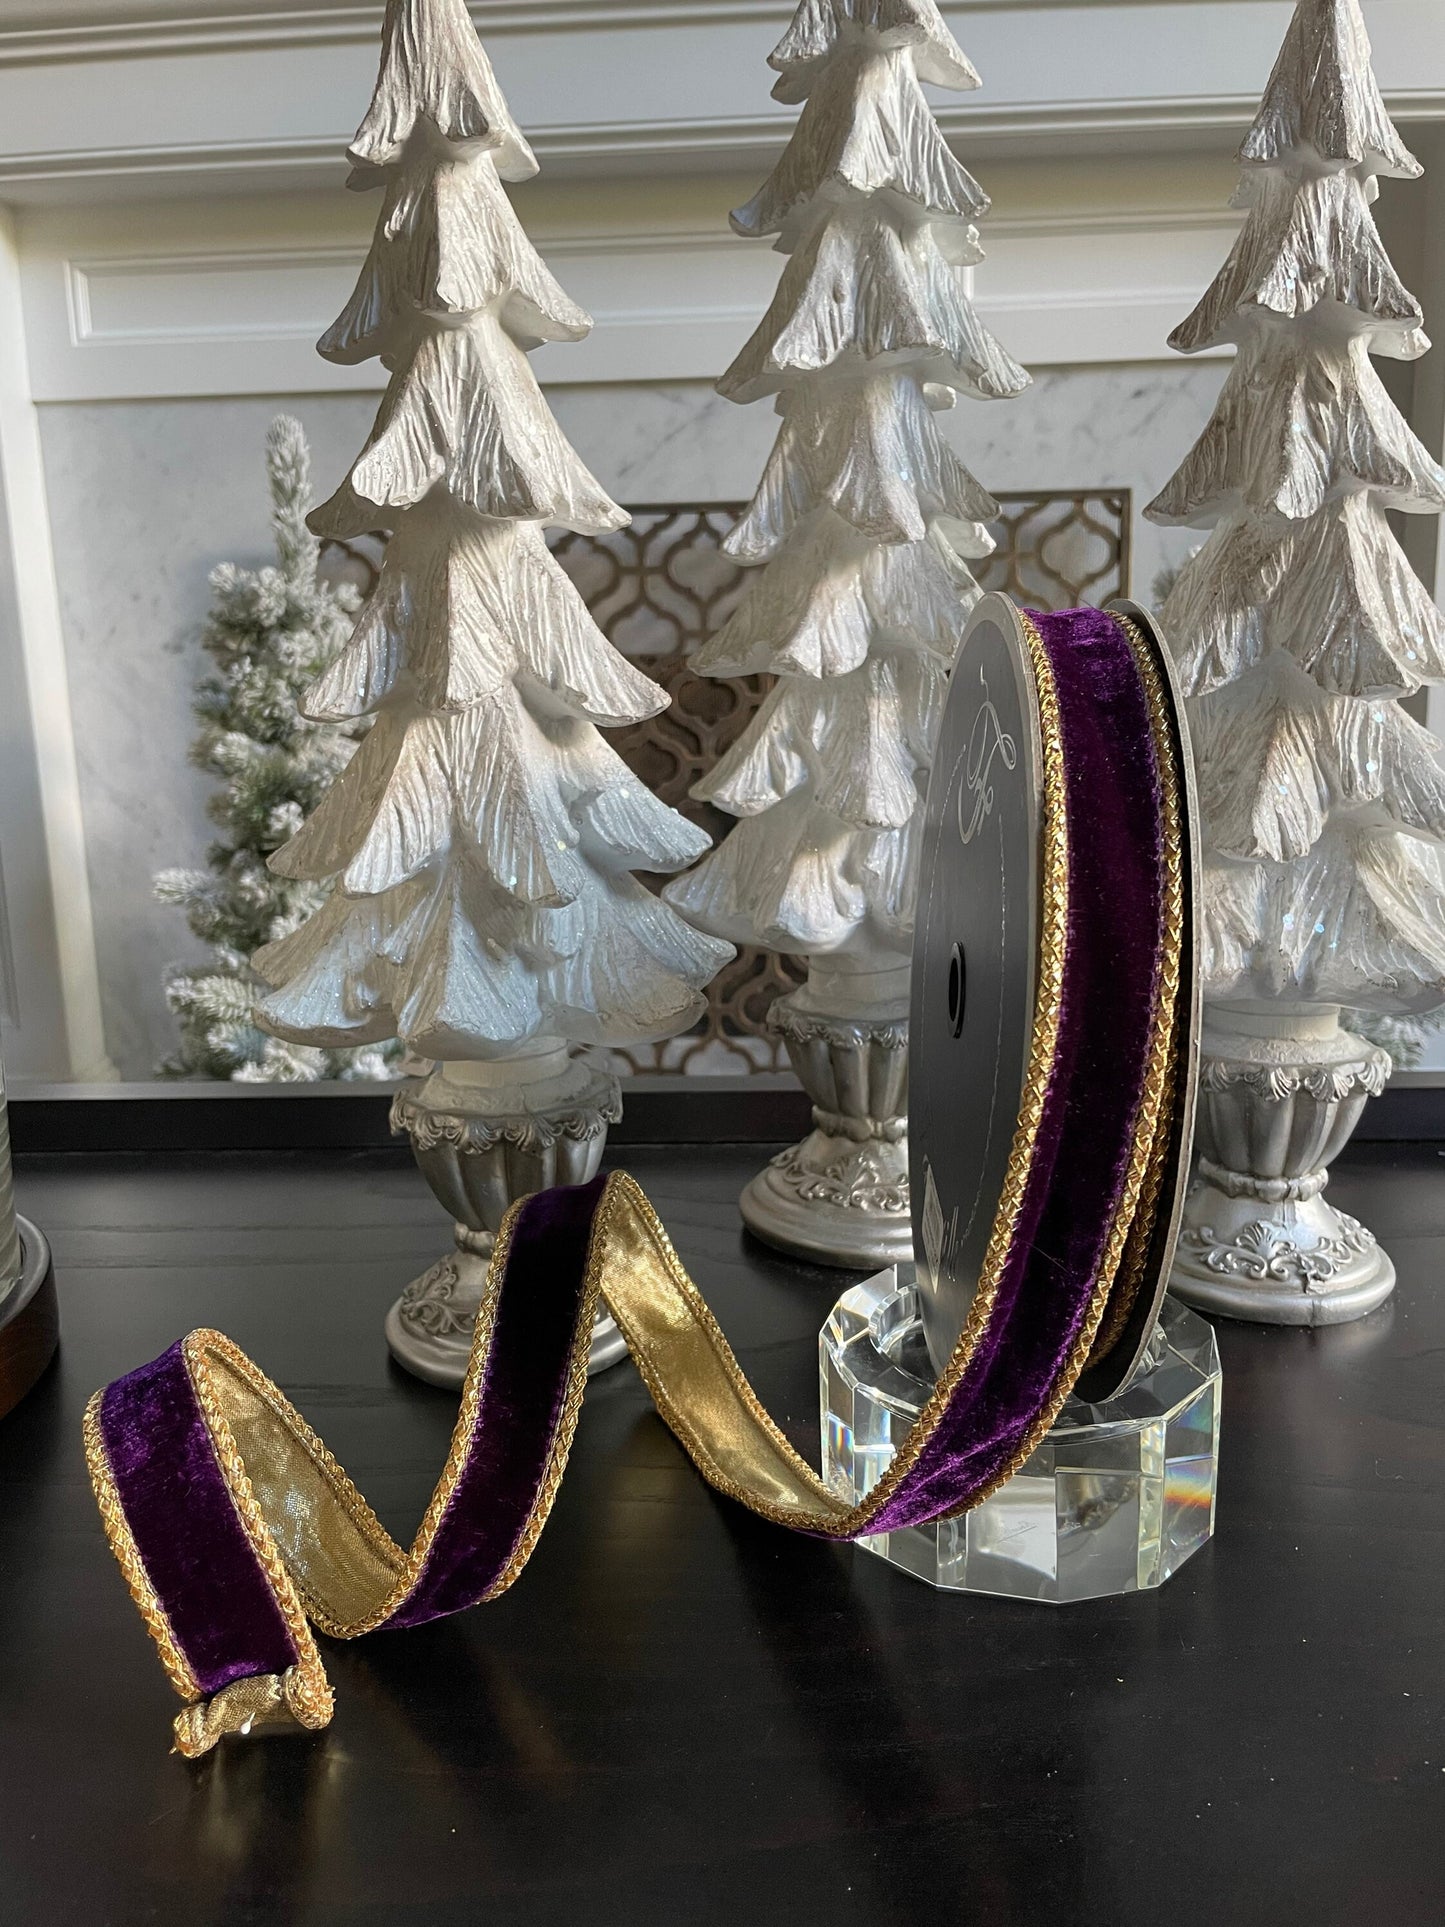 Designer royal velvet purple ribbon. 1”x 10 yards. Wired.*